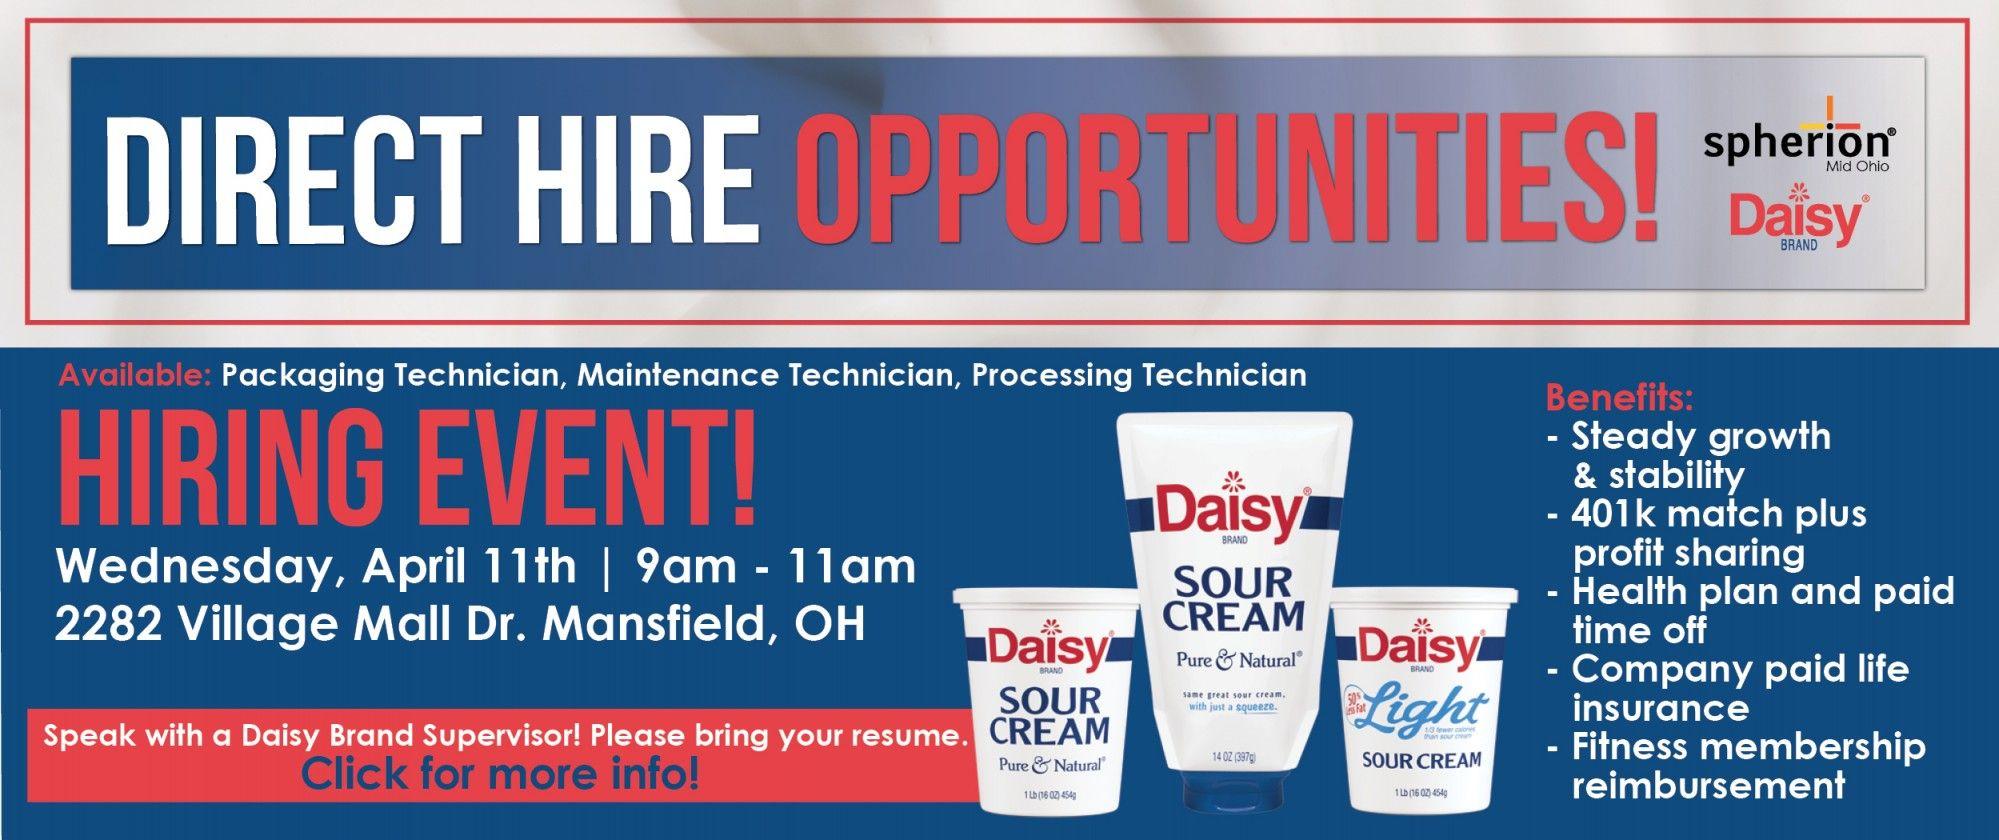 Daisy Brand Logo - Daisy Brand Direct Hiring Event - Spherion Ohio